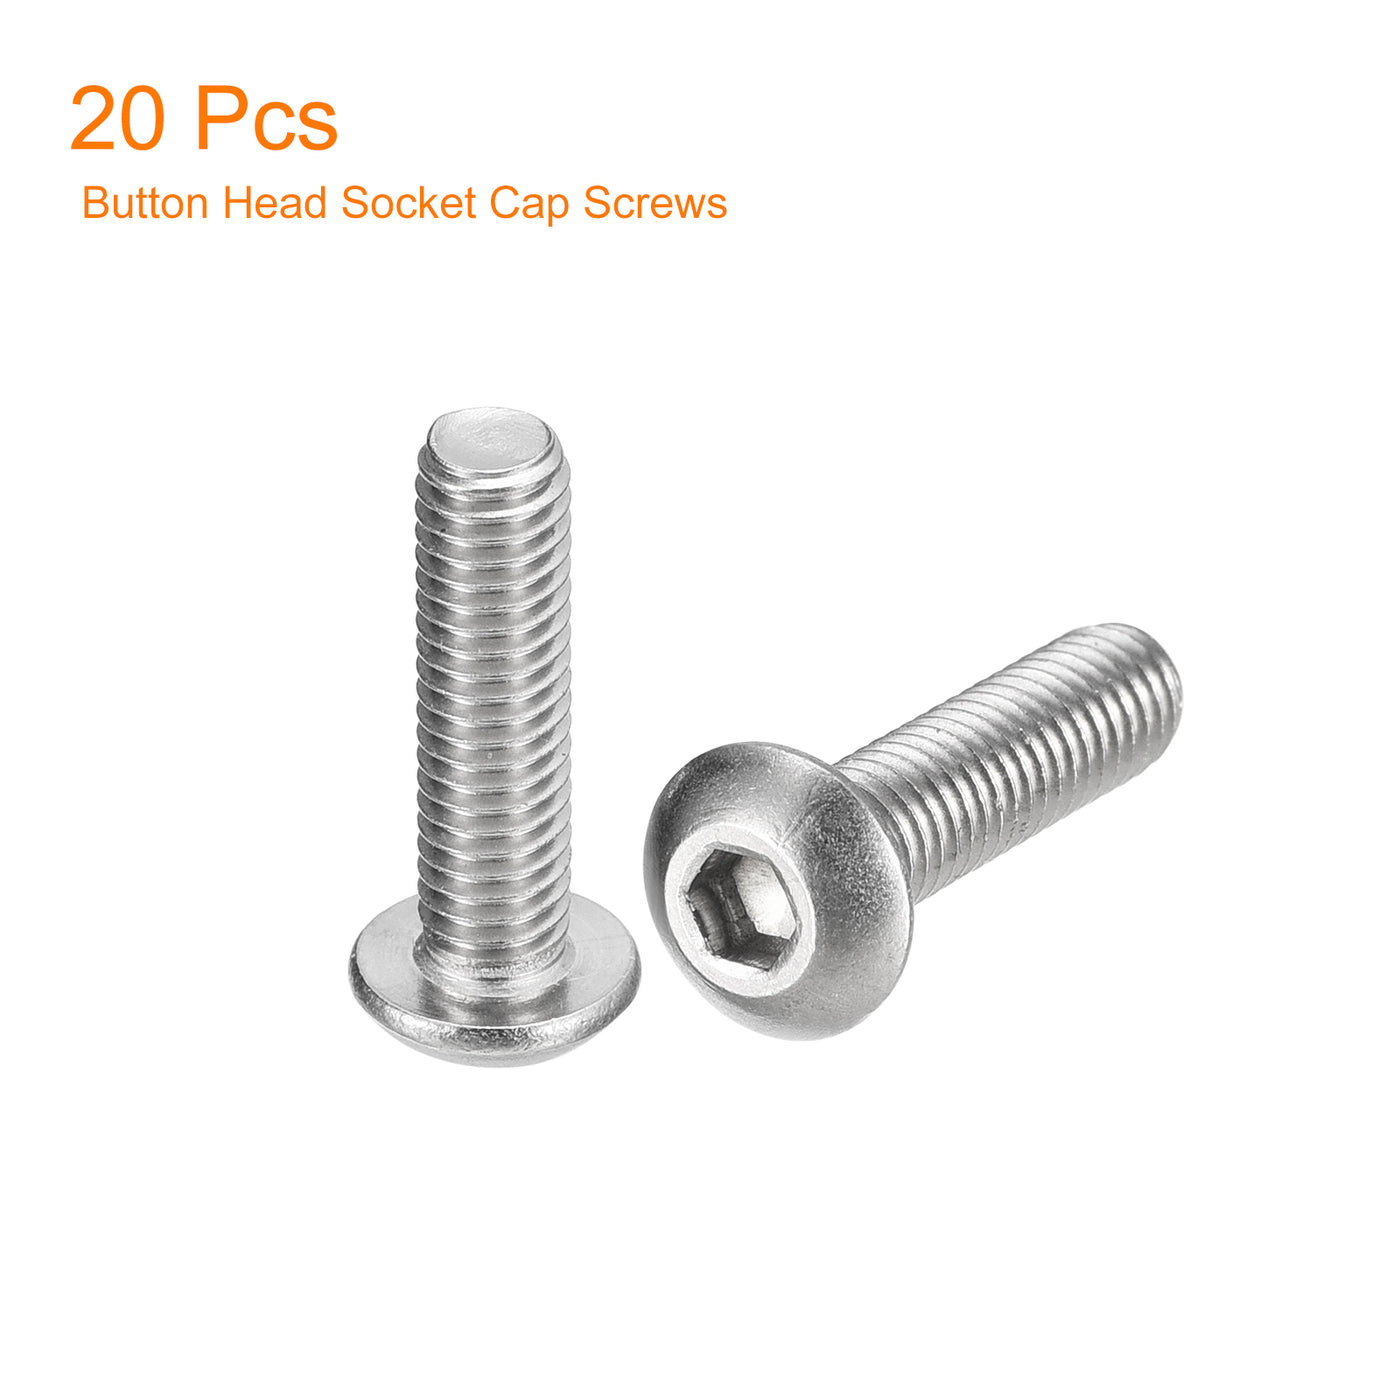 uxcell Uxcell #10-32x3/4" Button Head Socket Cap Screws, 20pcs 304 Stainless Steel Screws